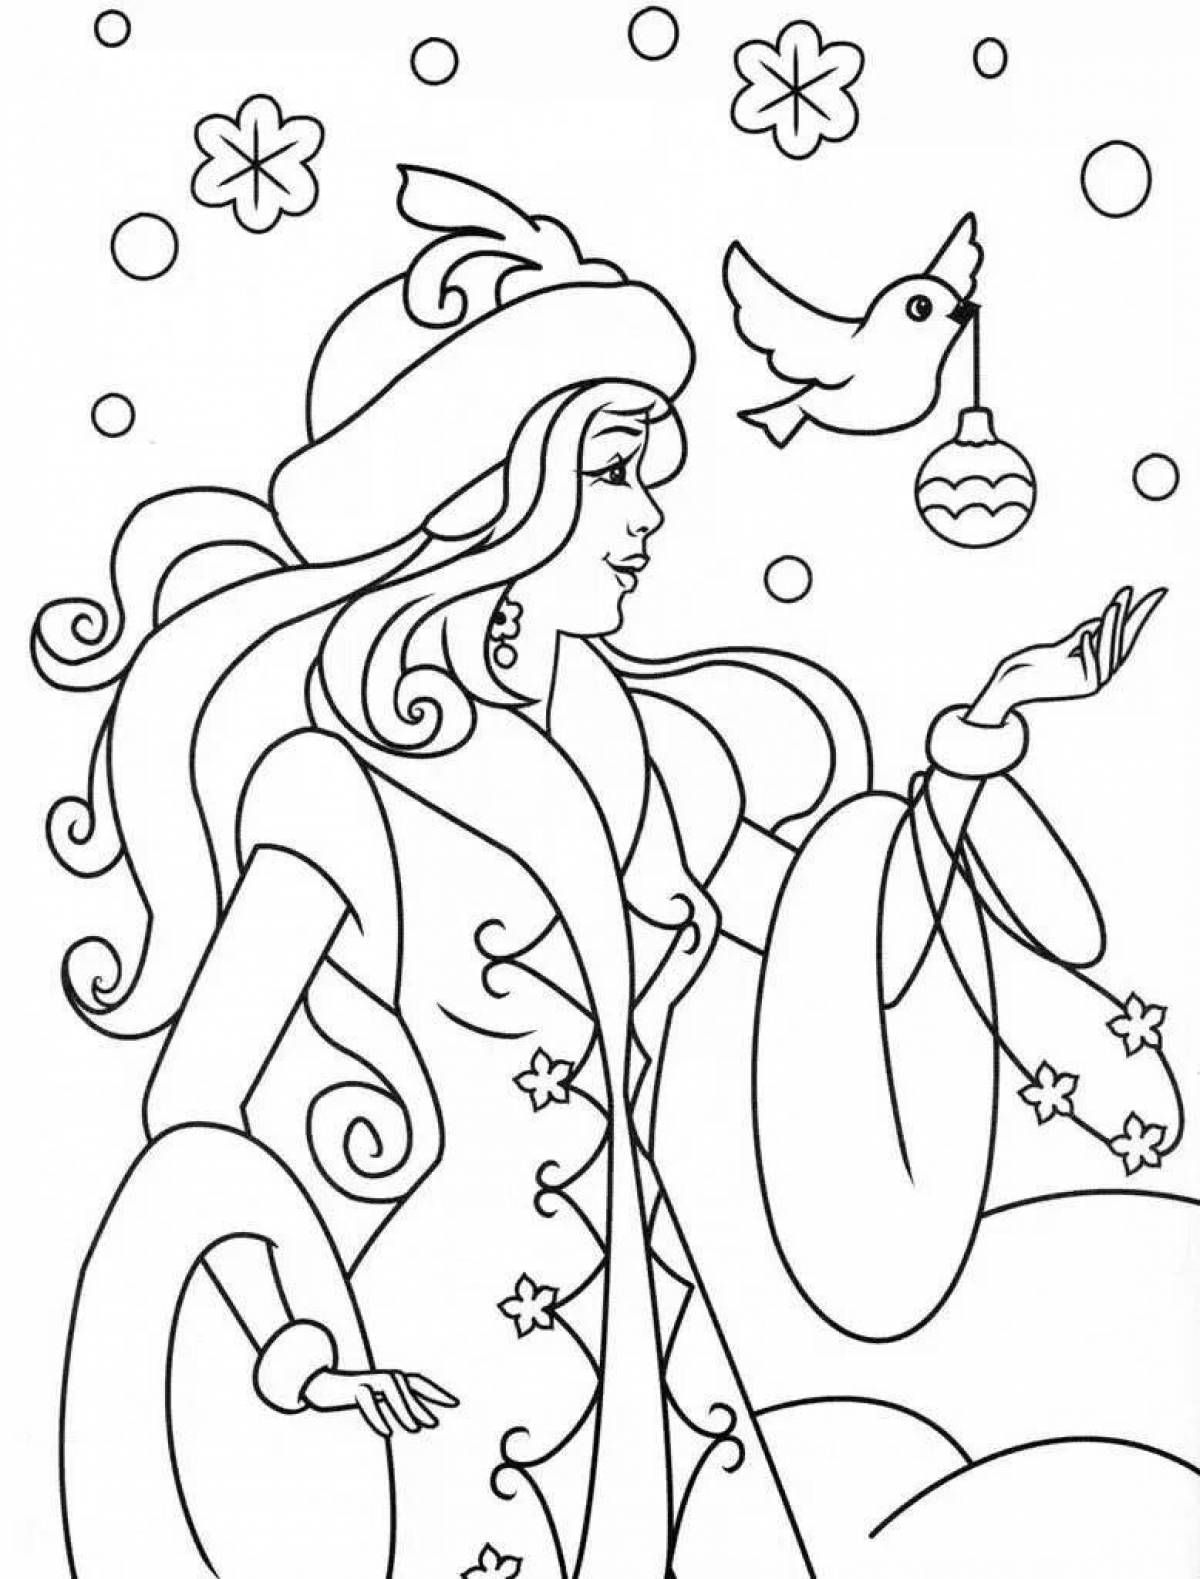 Shiny winter fantasy coloring book